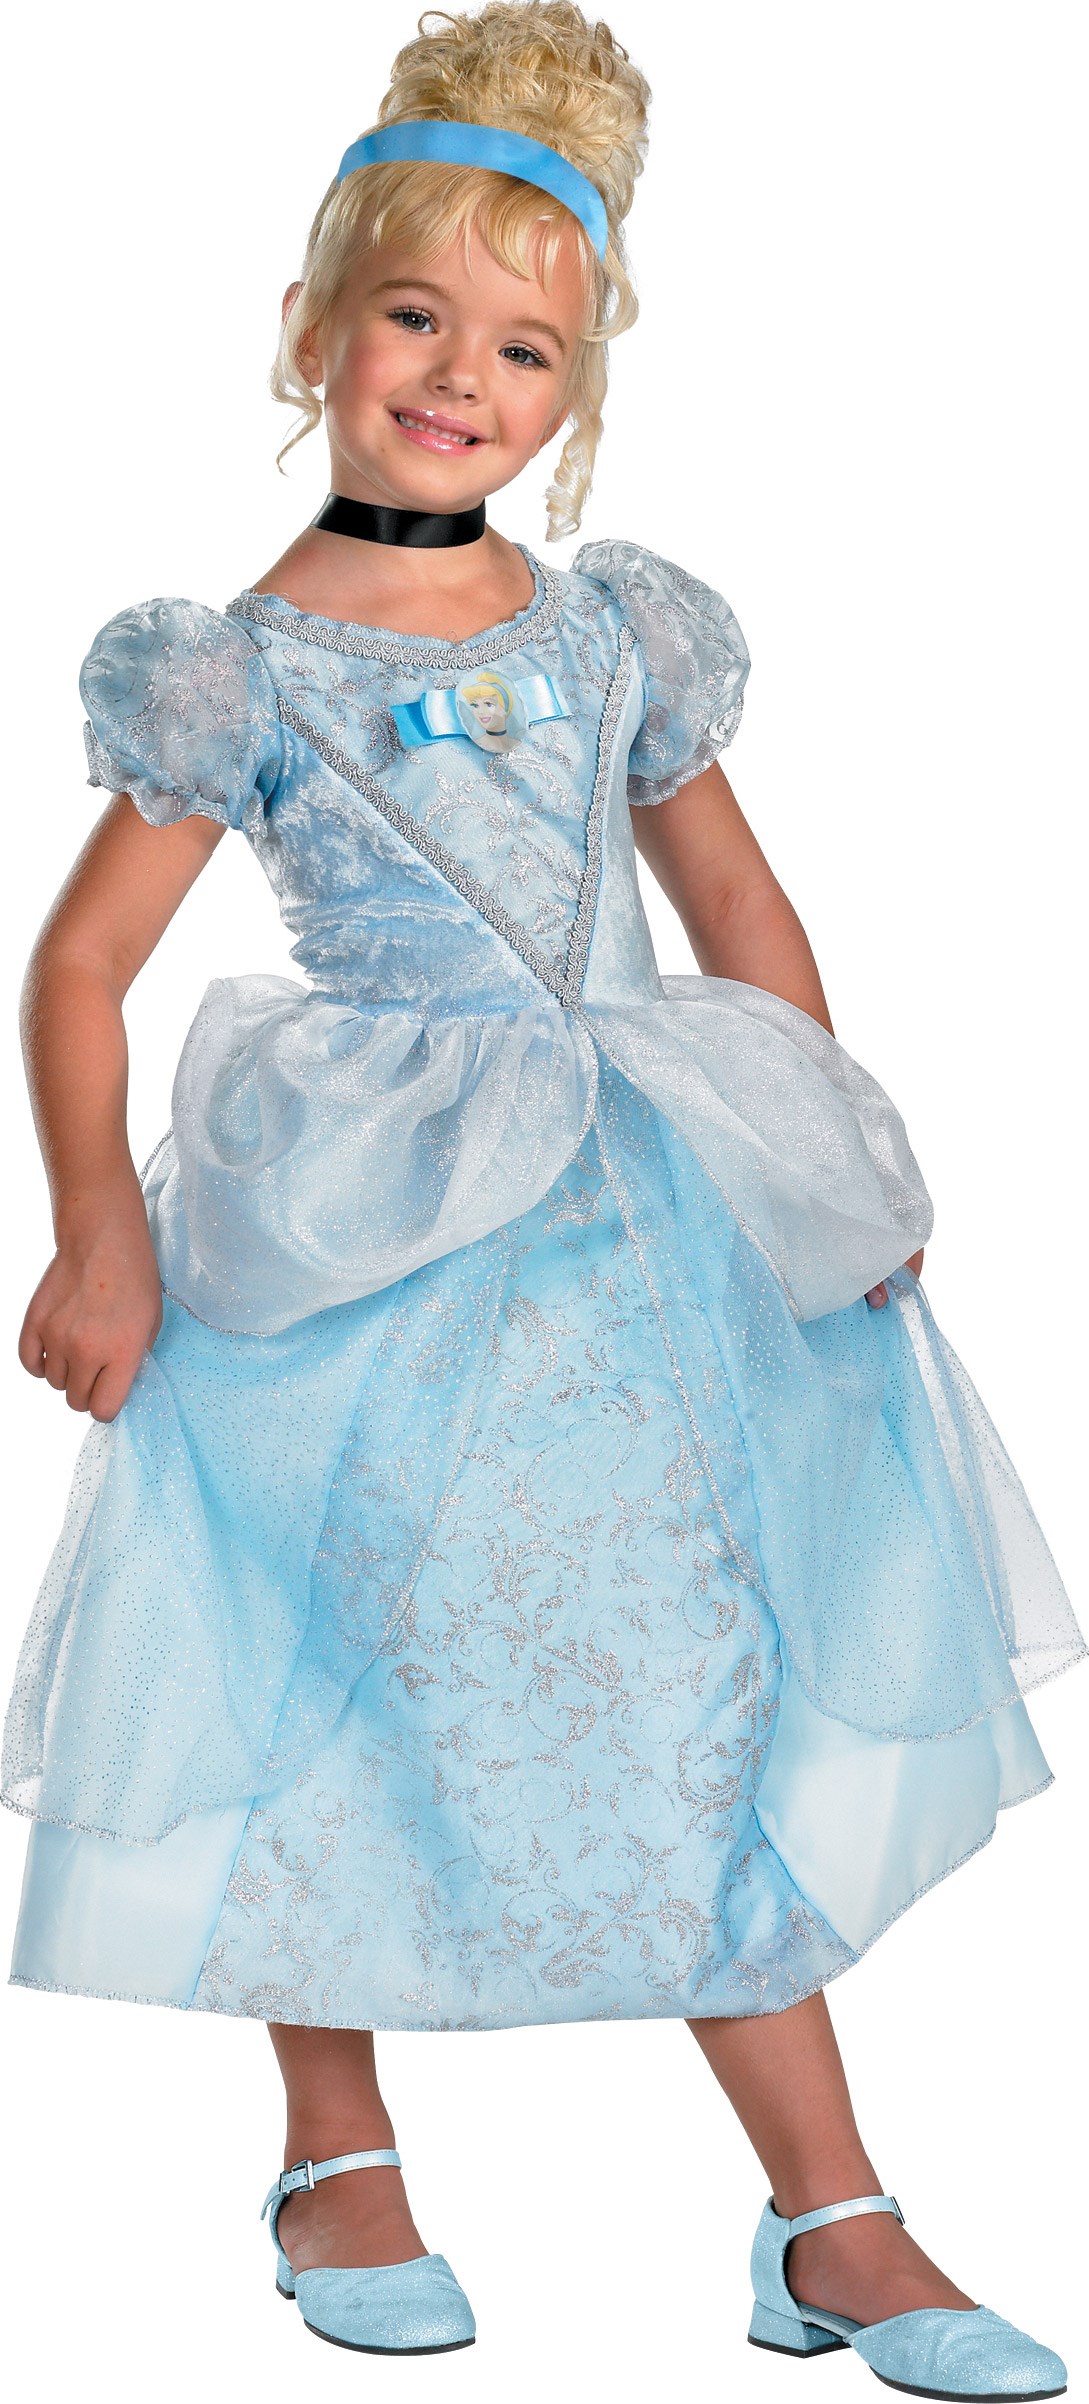 Cinderella Deluxe Toddler/Child Costume